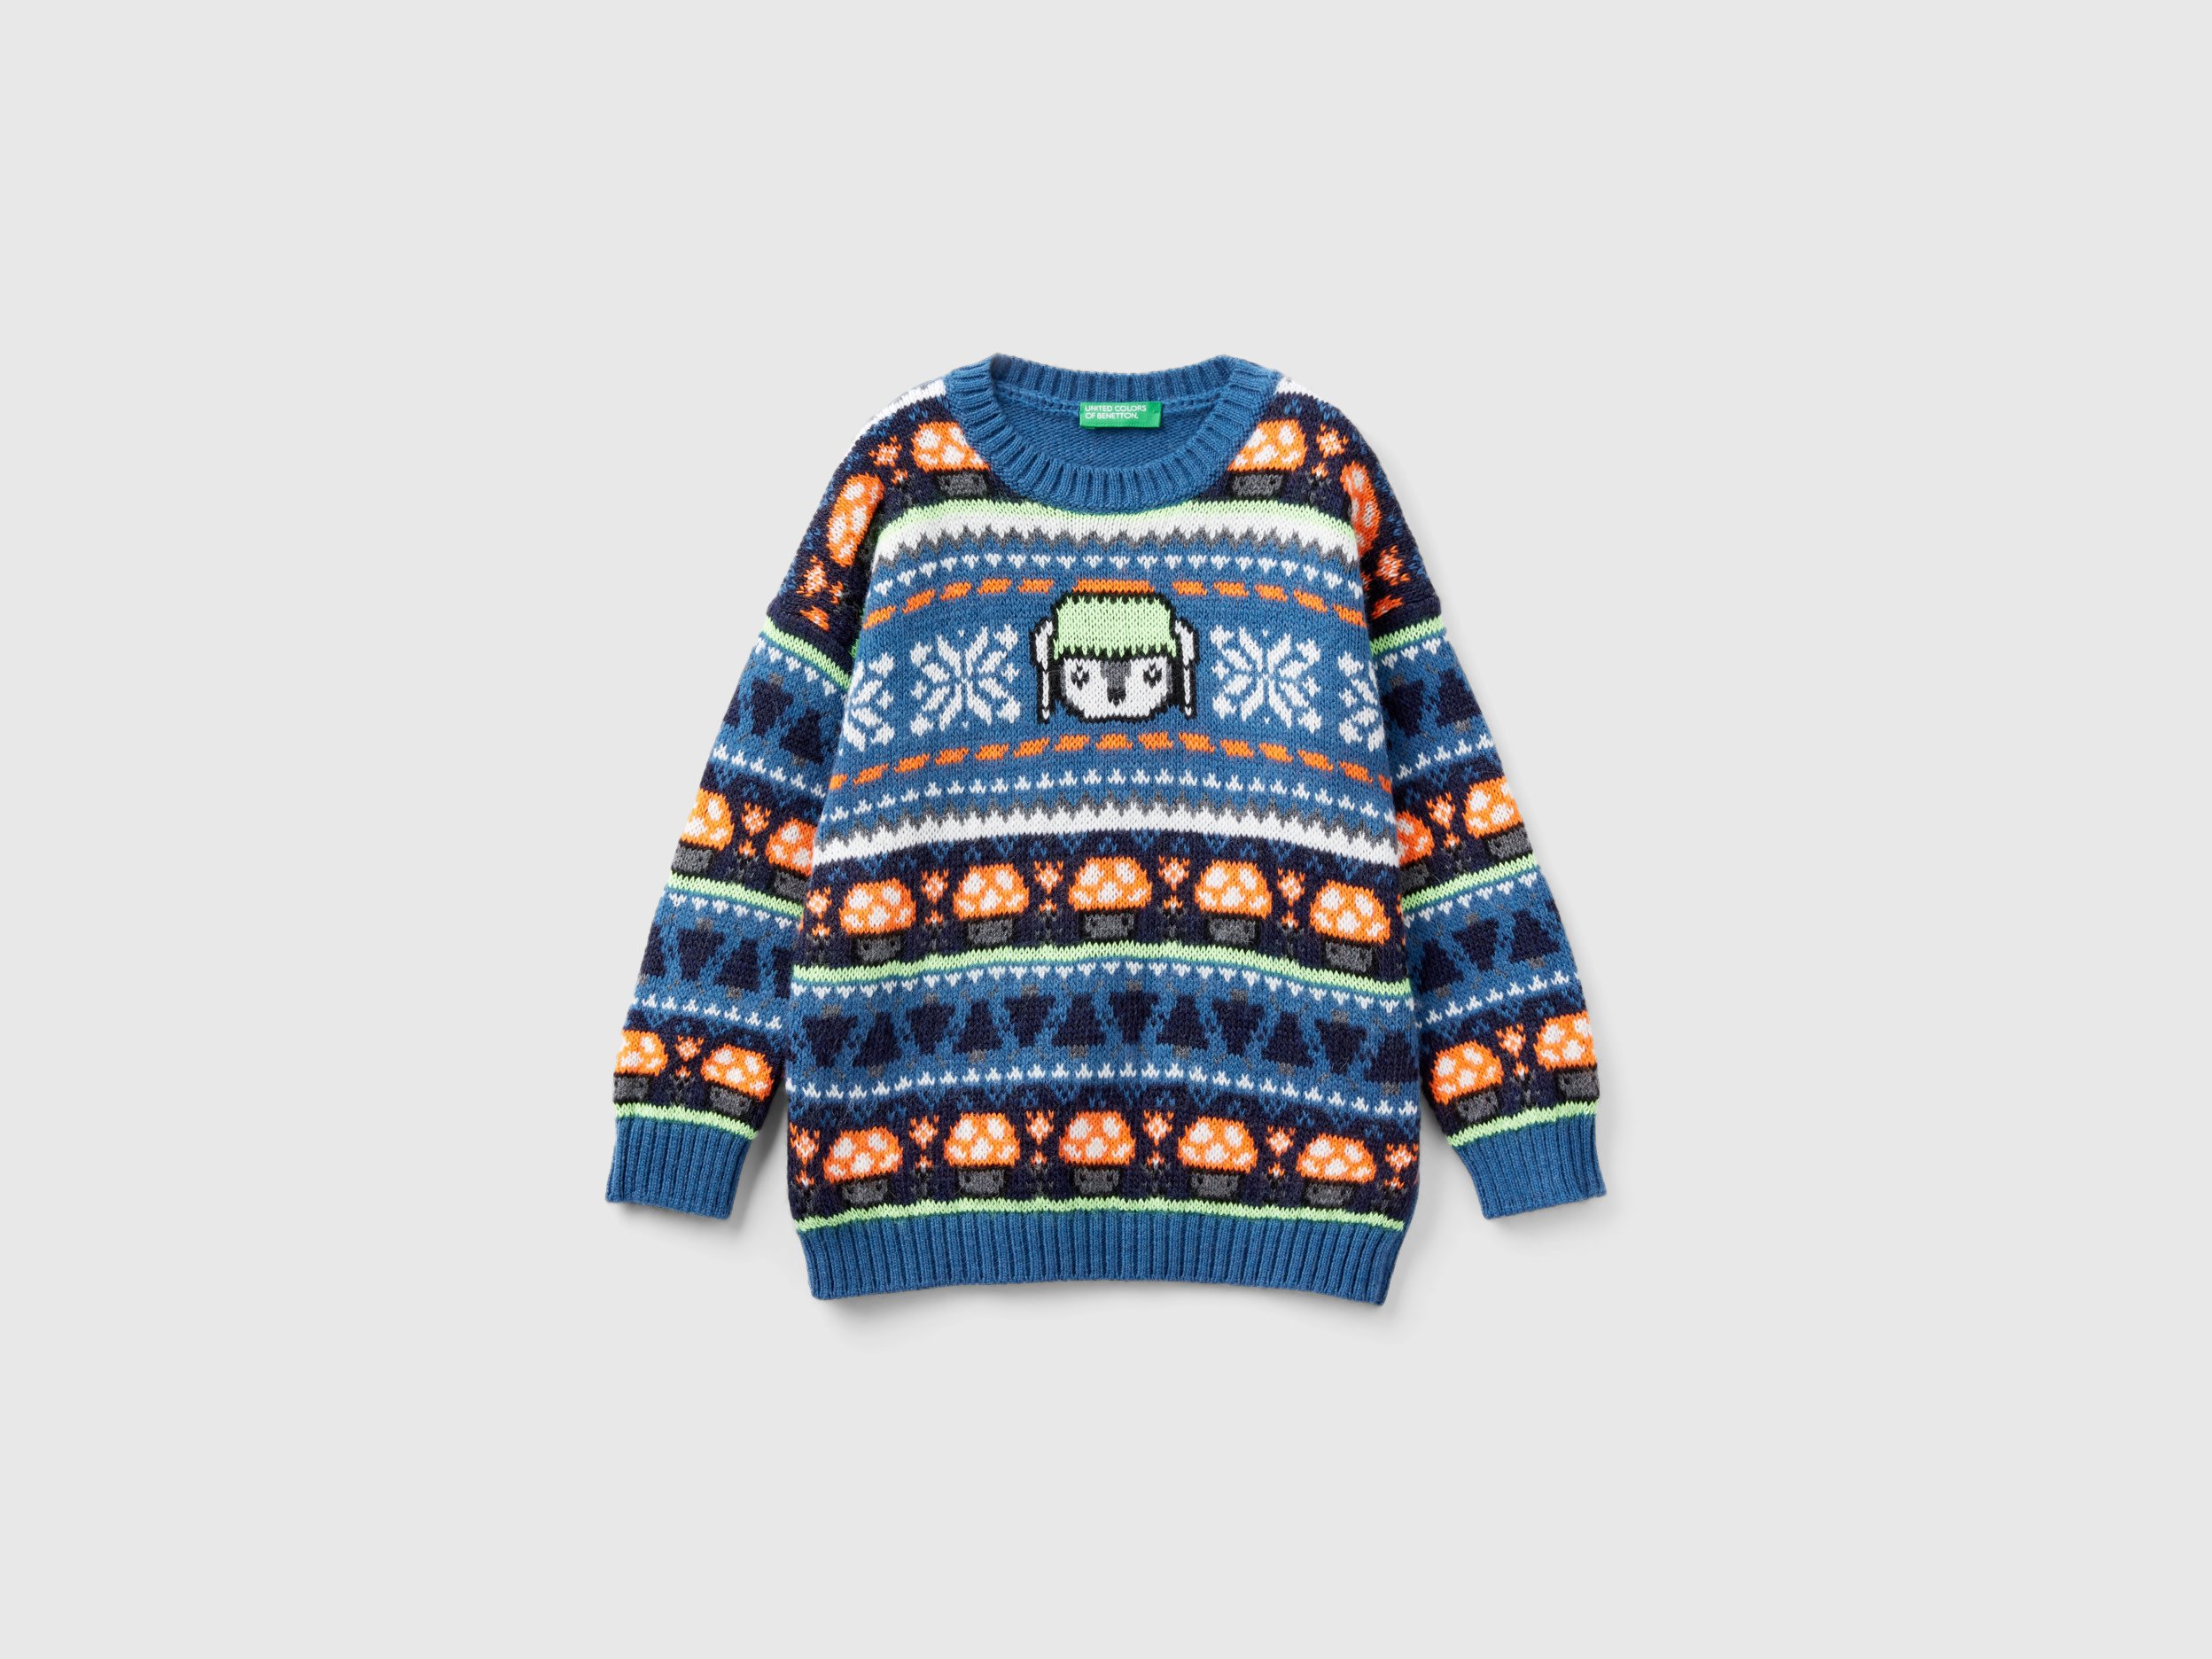 Benetton, Jacquard Sweater In Wool Blend, size 12-18, Multi-color, Kids